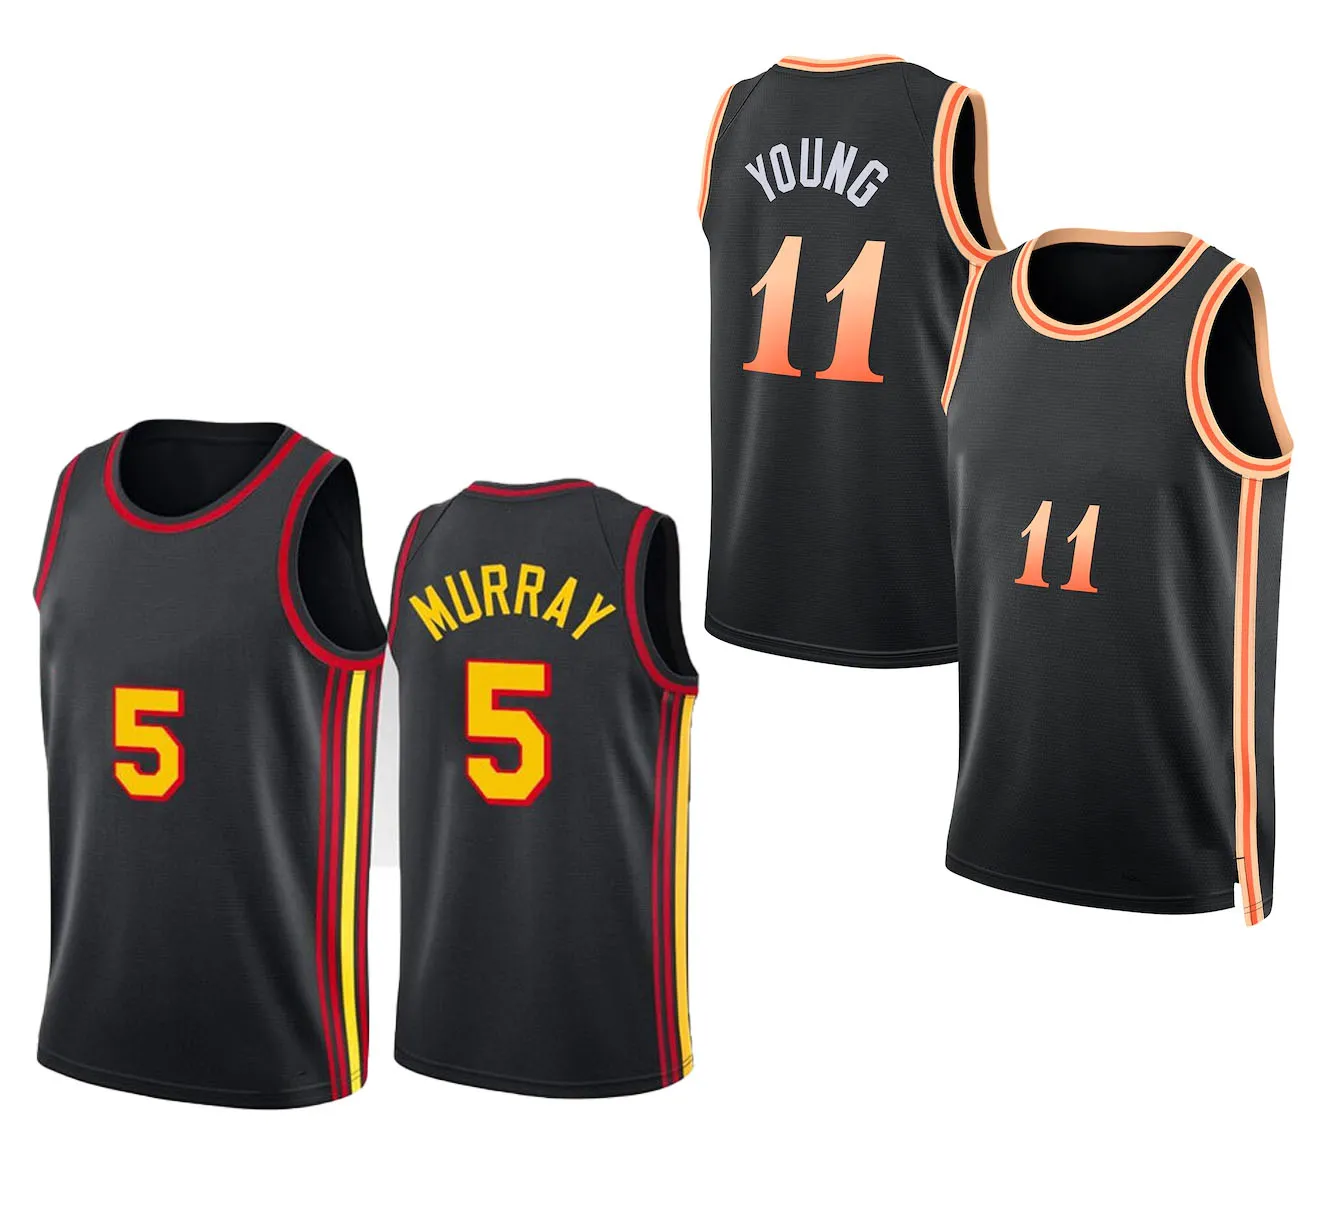 5 Murray 11 YOUNG 2022 Basketball Jerseys yakuda store online wholesale College Wears comfortable sportswear sports wholesale popular